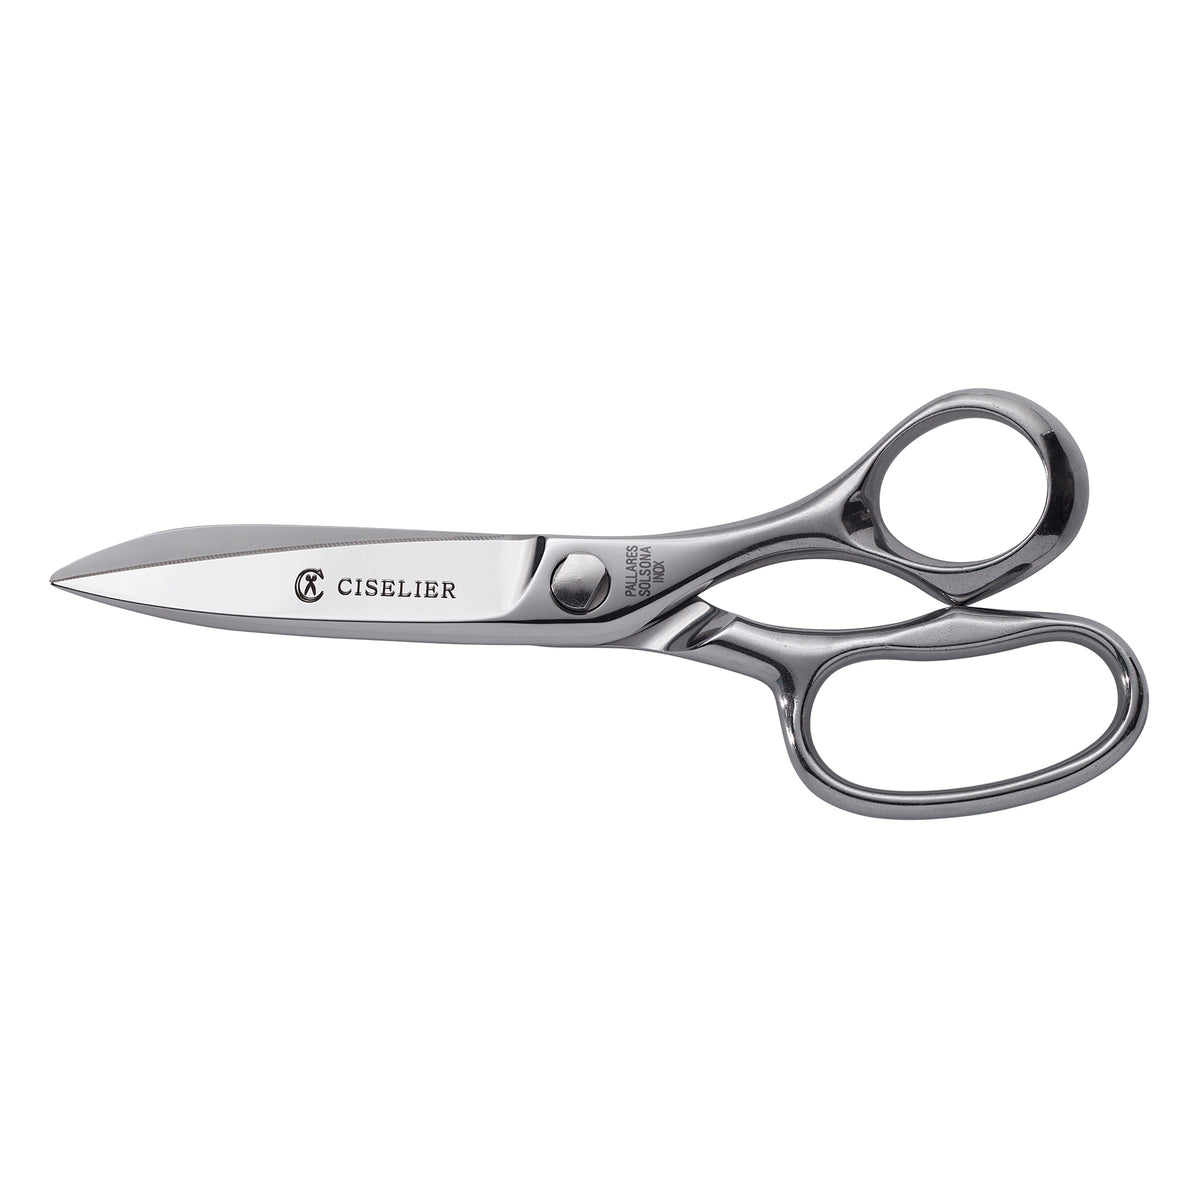 pallares solsona professional kitchen scissors